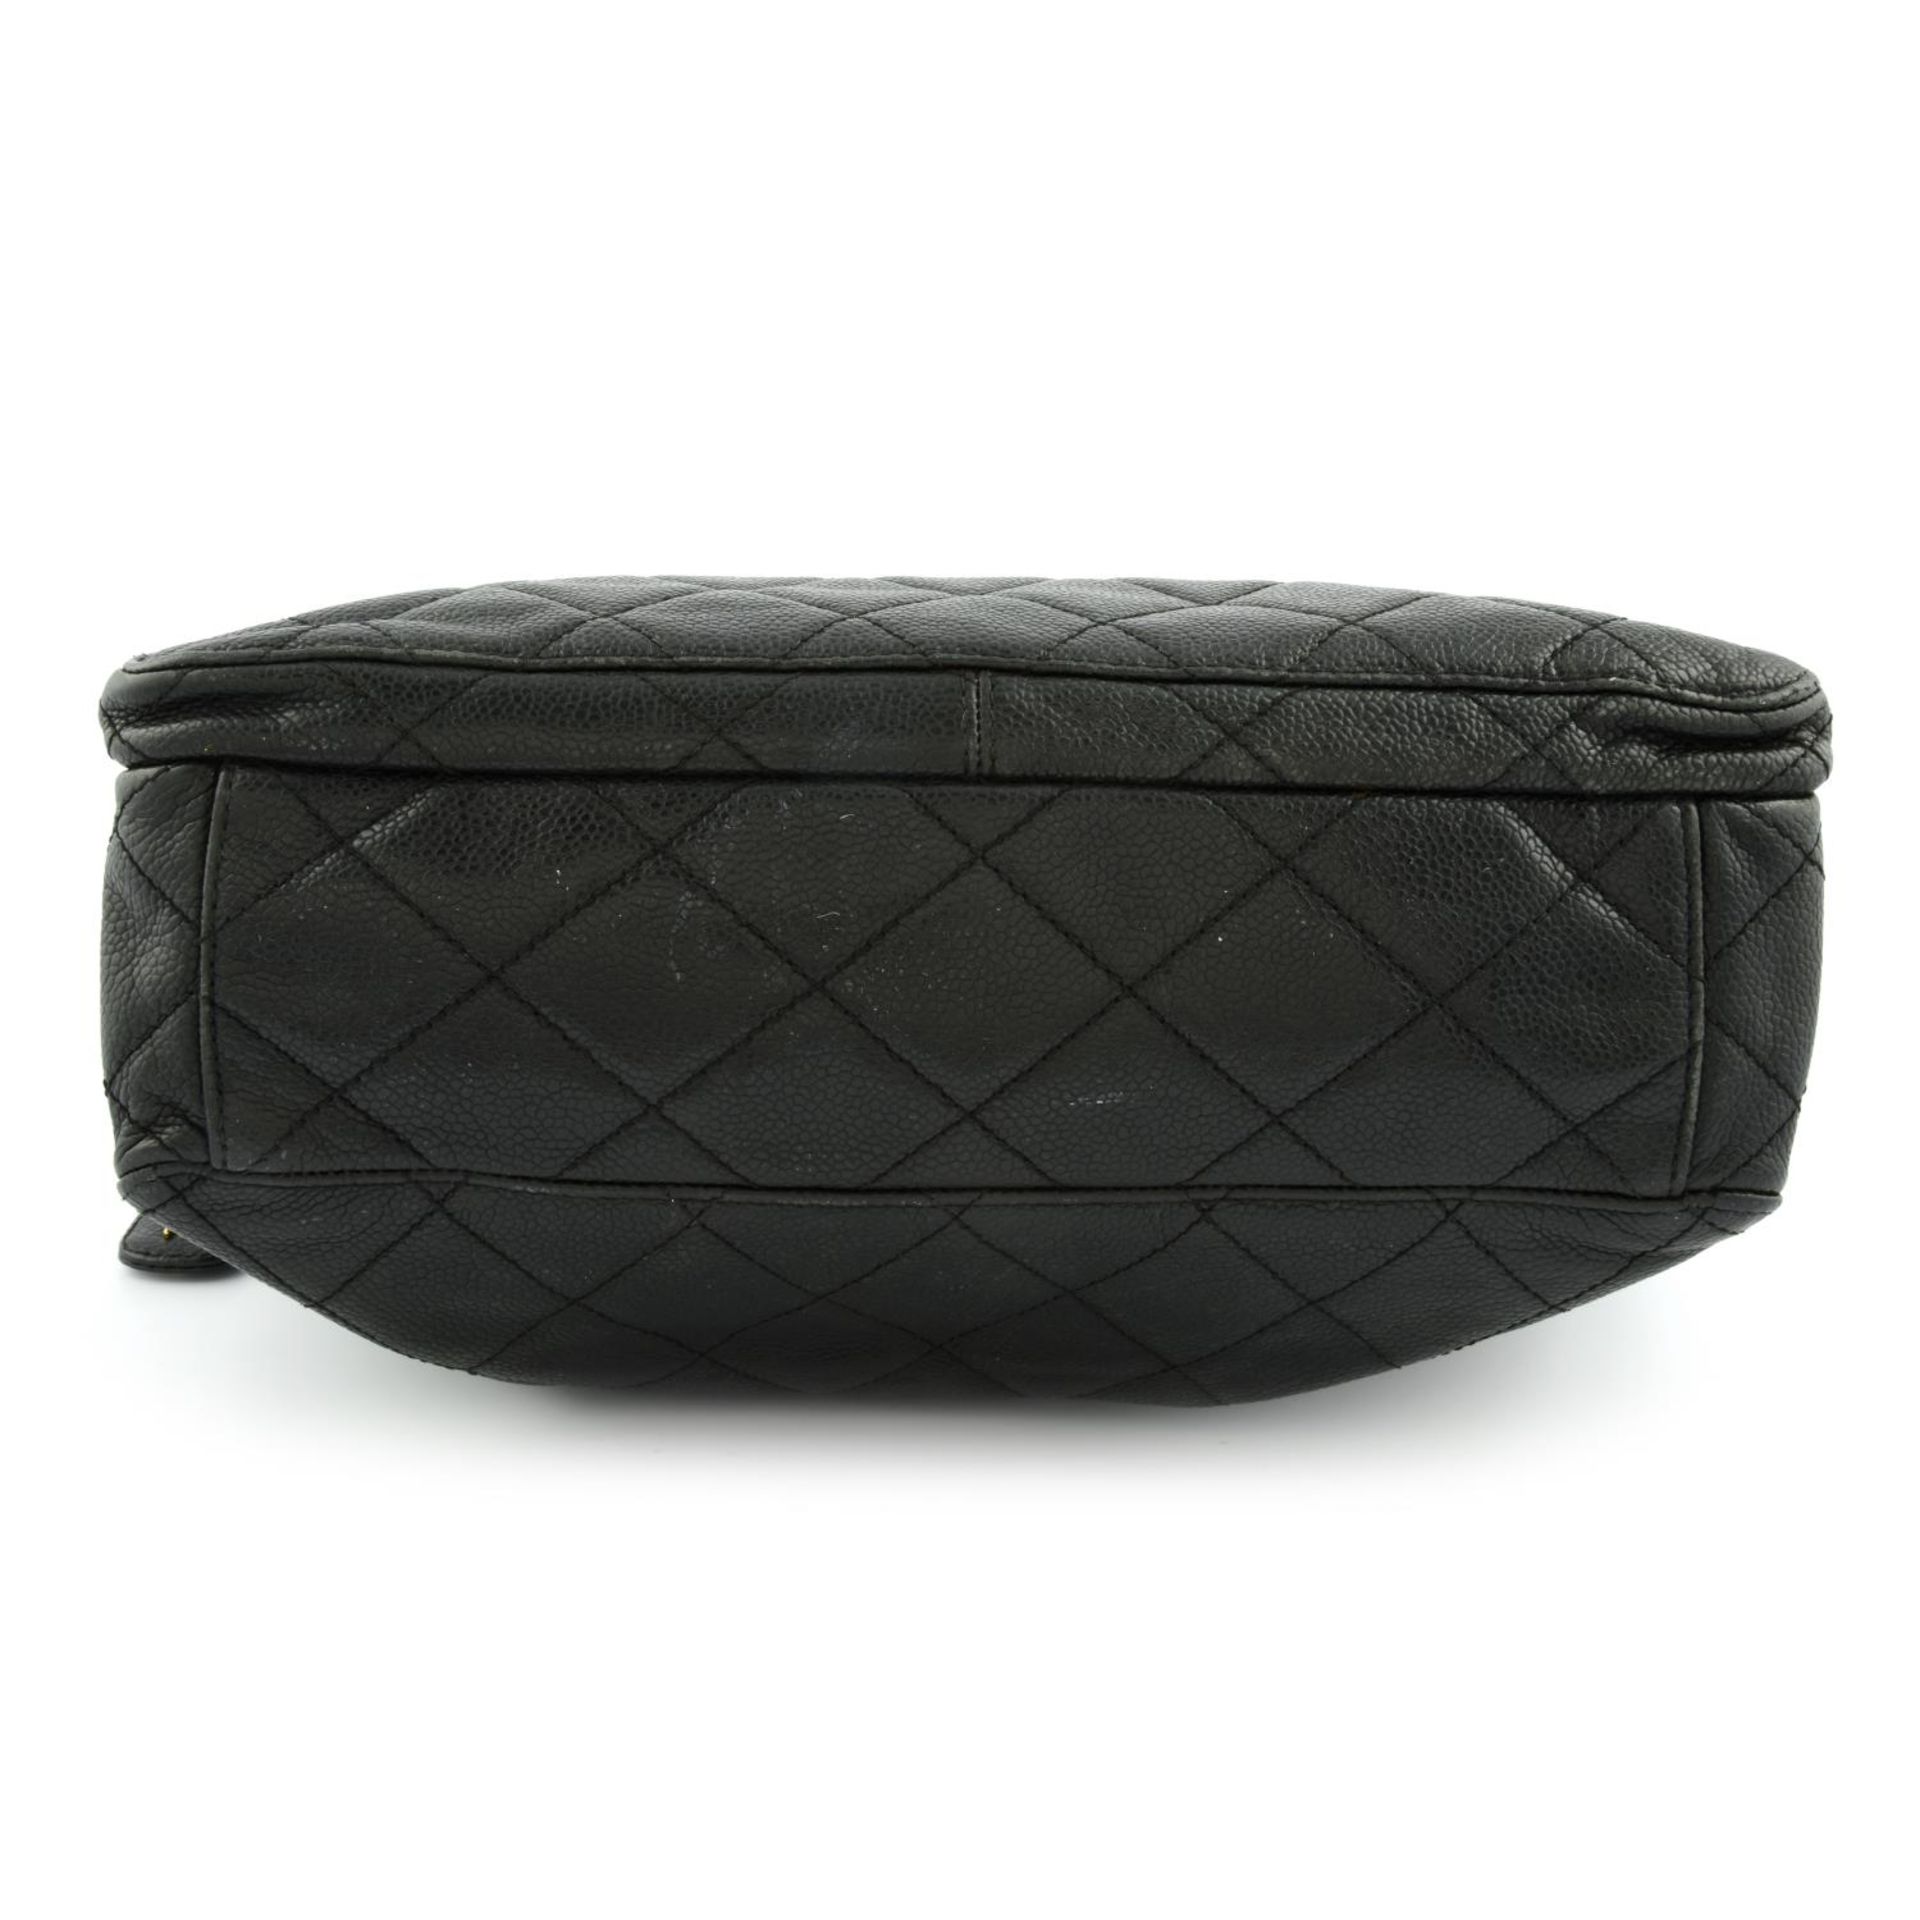 CHANEL - a vintage black caviar leather Petite Shopping Tote handbag. - Image 5 of 6